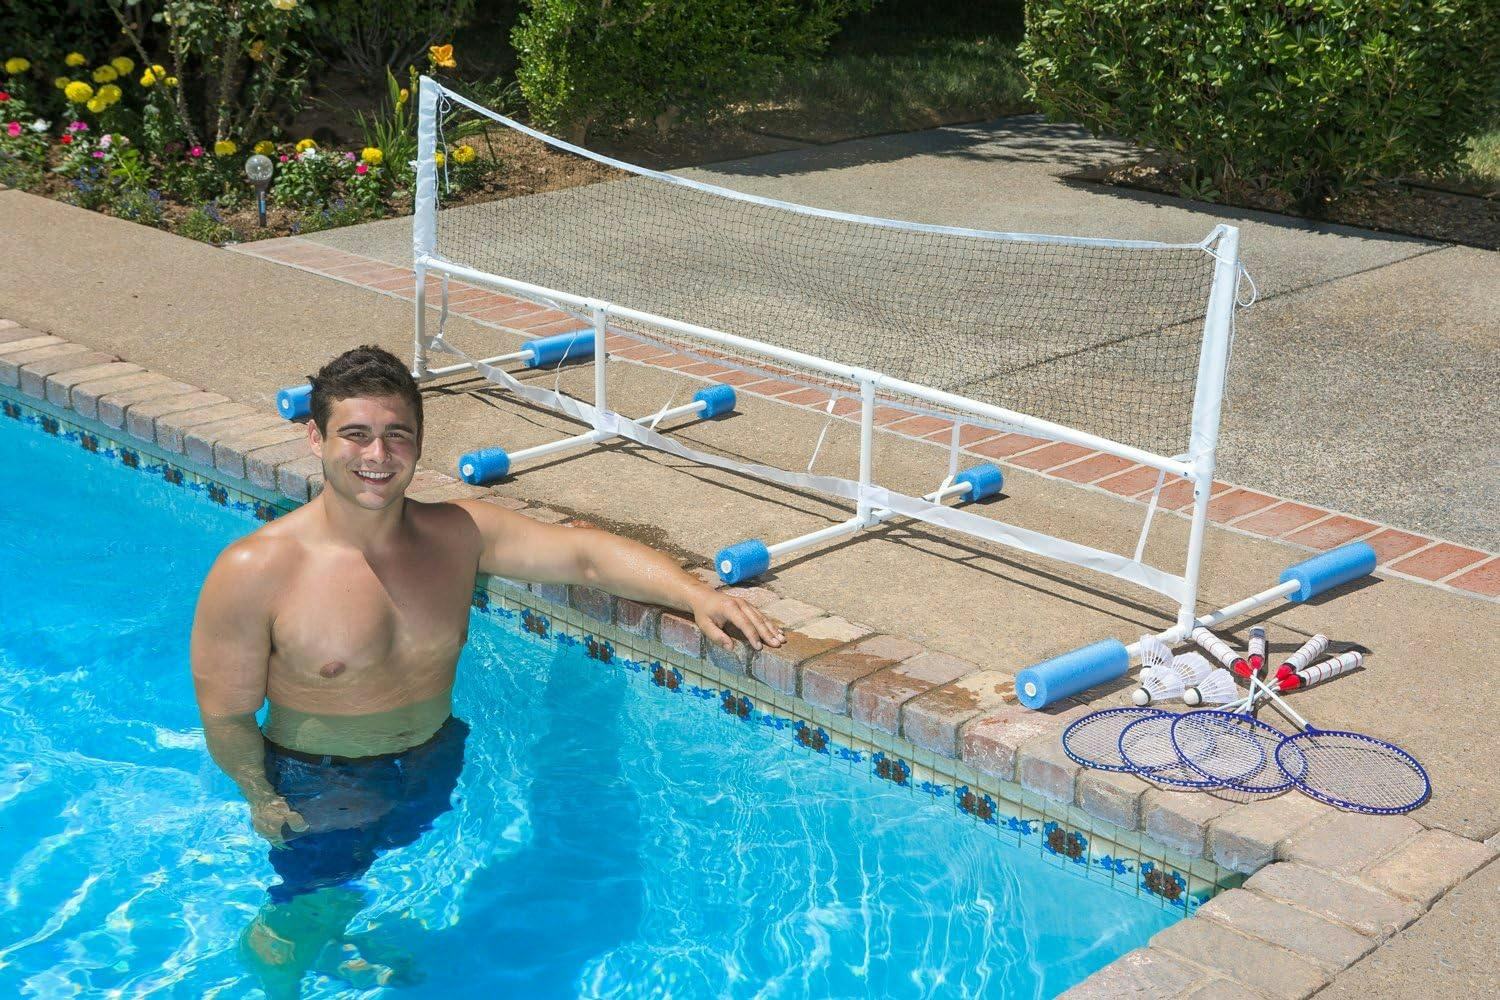 Deluxe 90" Multifunctional Water Volleyball/Badminton Pool Set